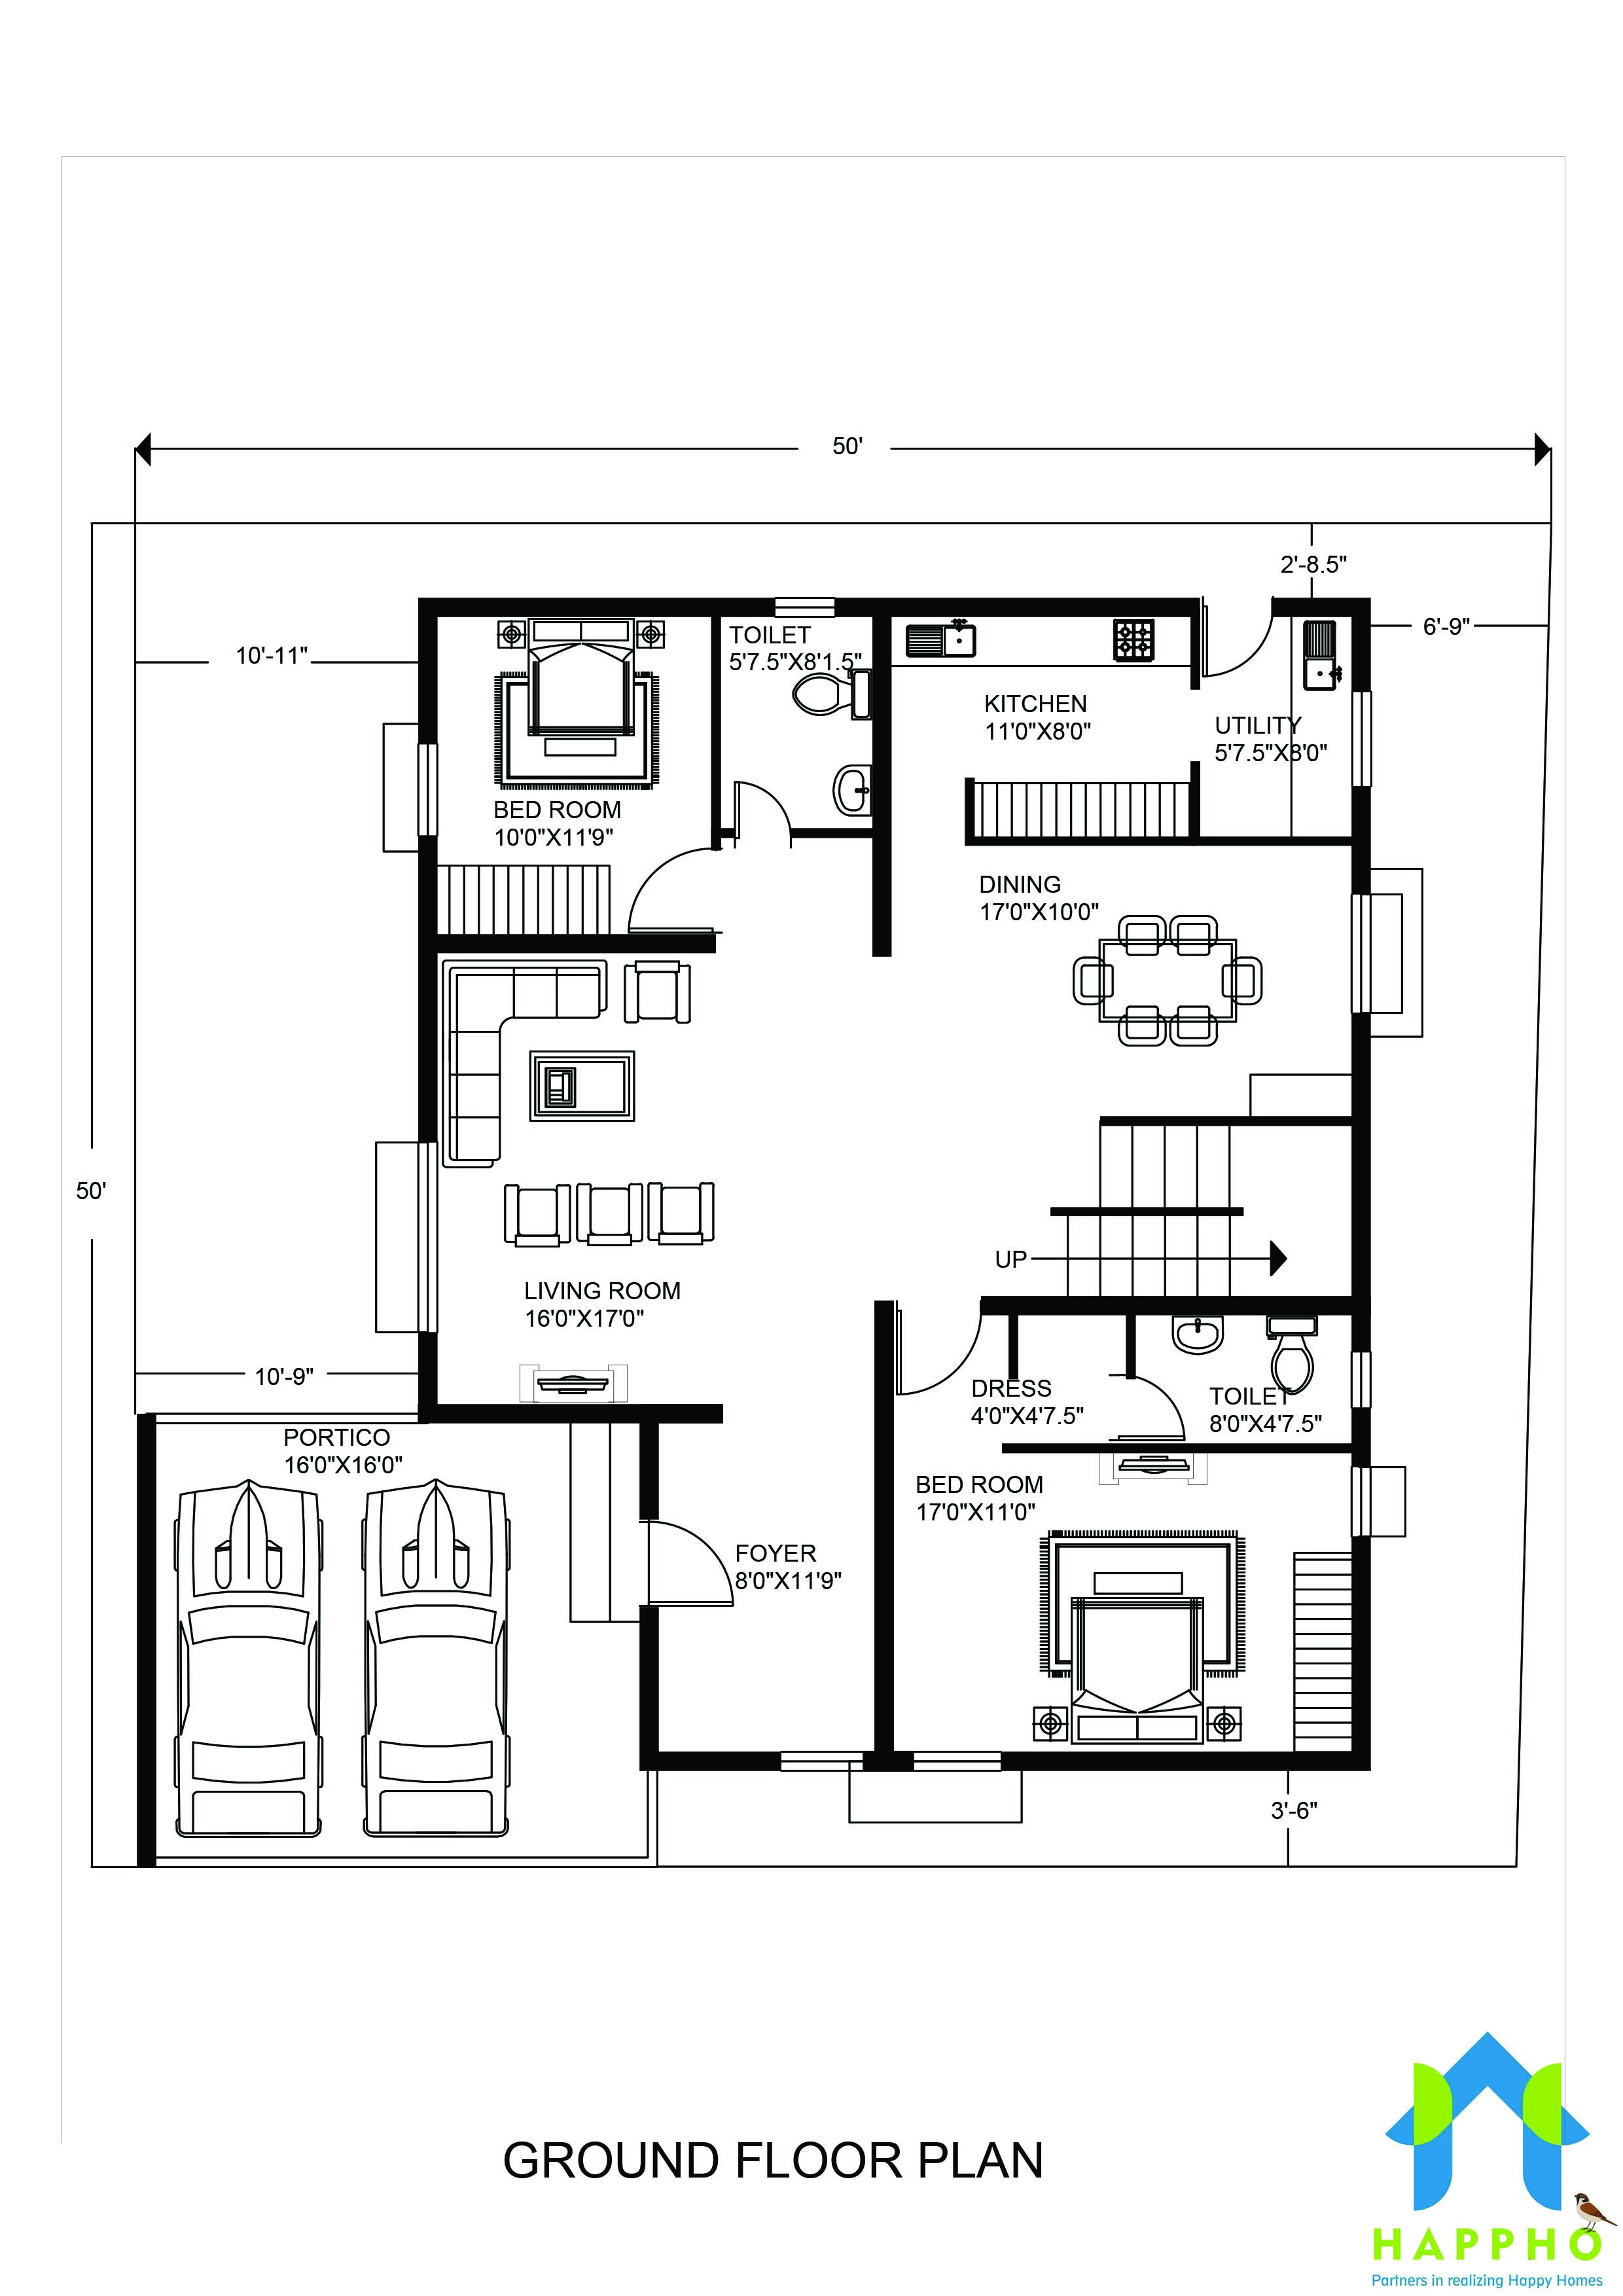 5-BHK Floor Plan for 25 X 25 Feet plot (2500 Square Feet) 25 Feet By 25 Feet Is How Many Square Feet